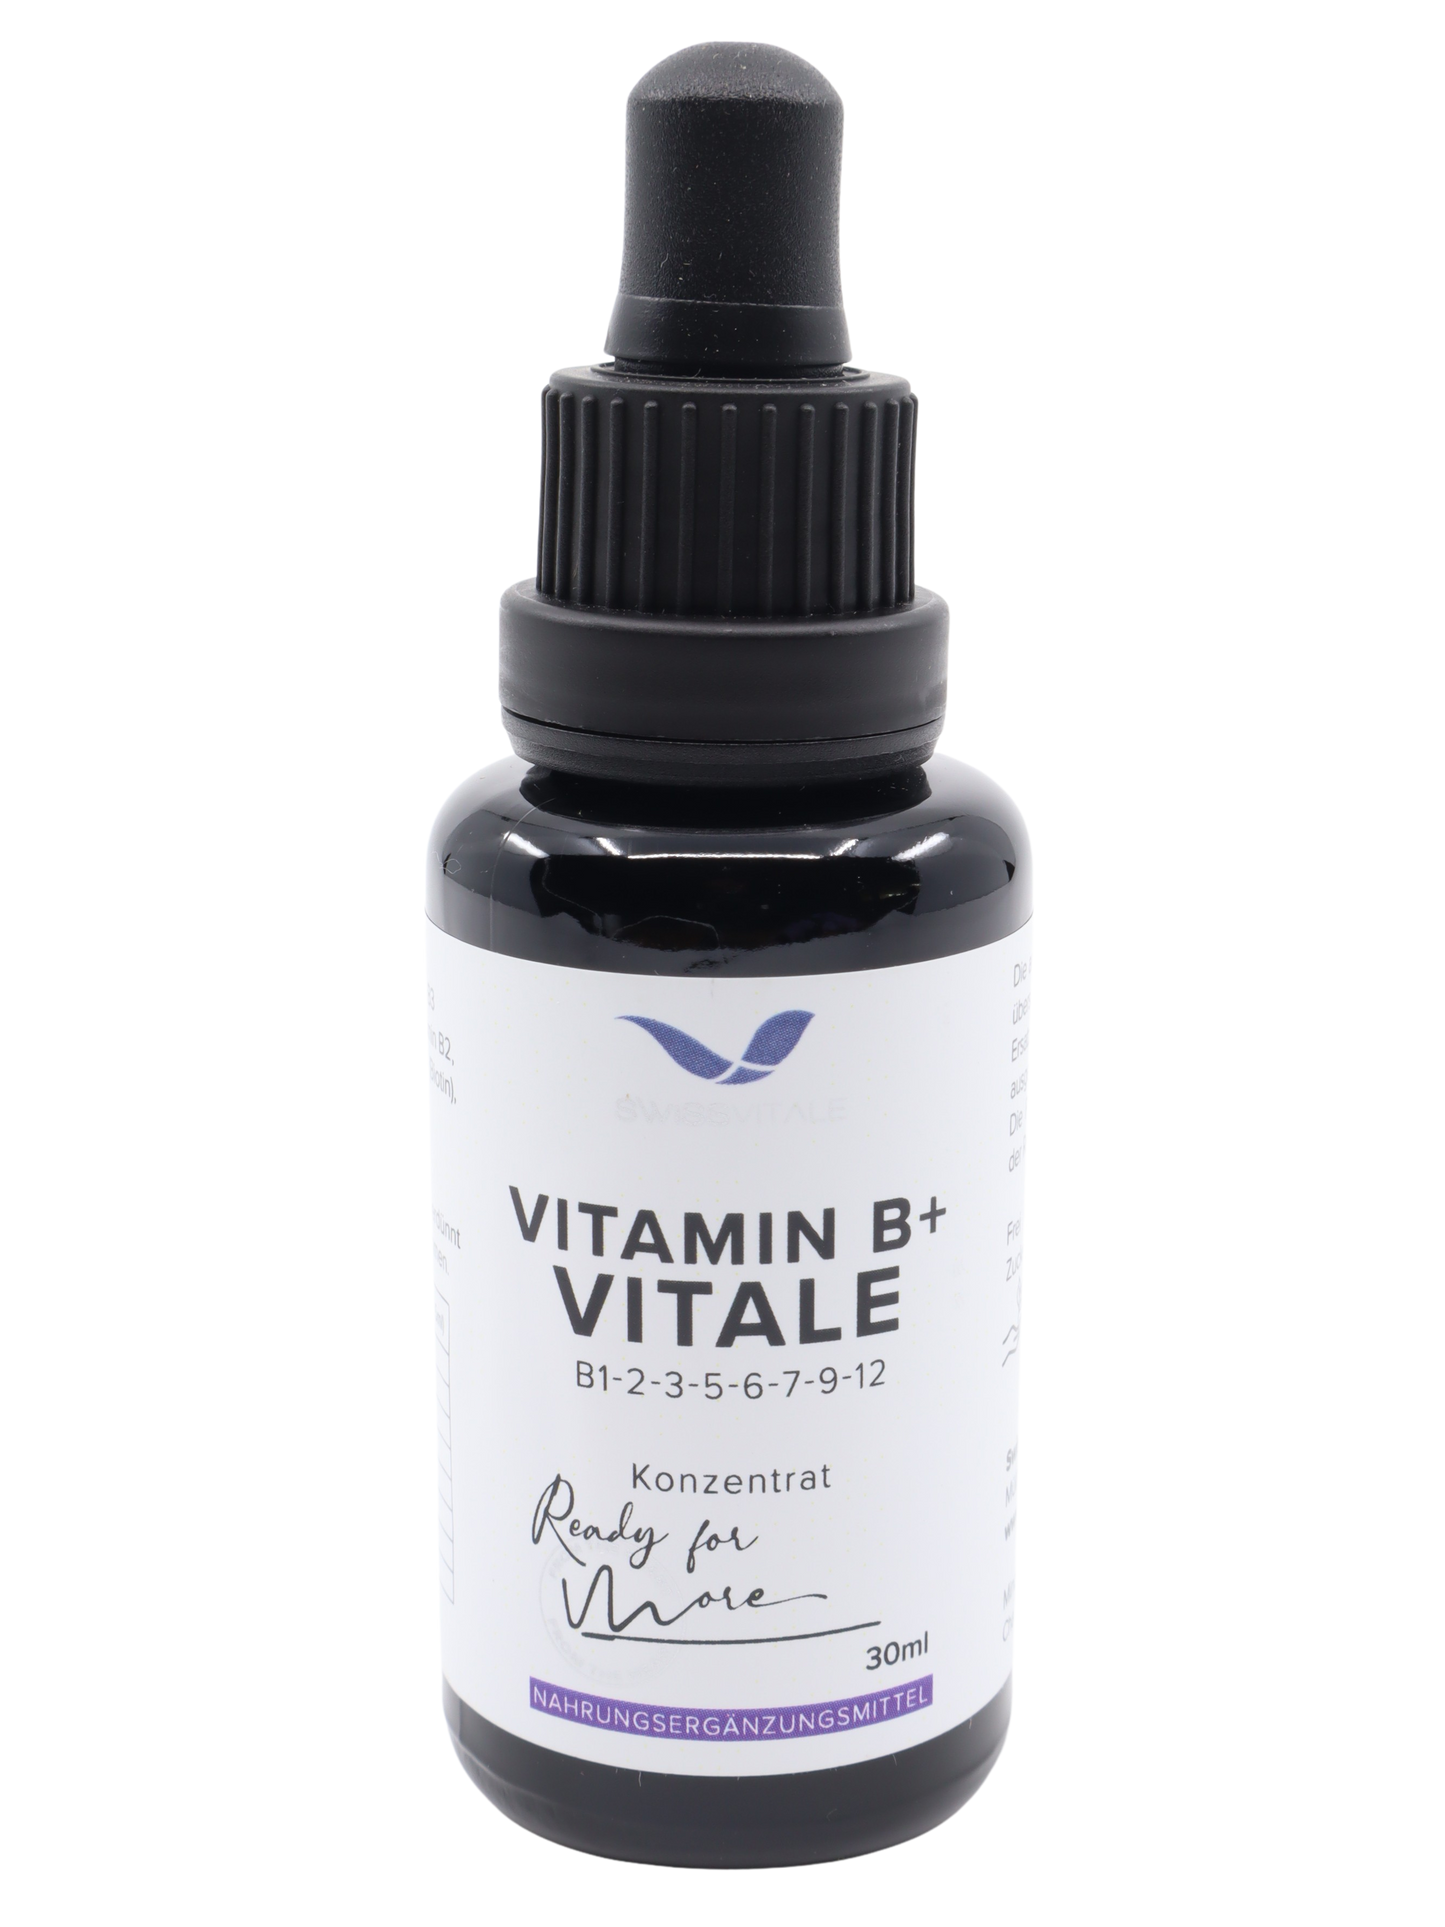 Vitamin B+ drops, organic, vegan